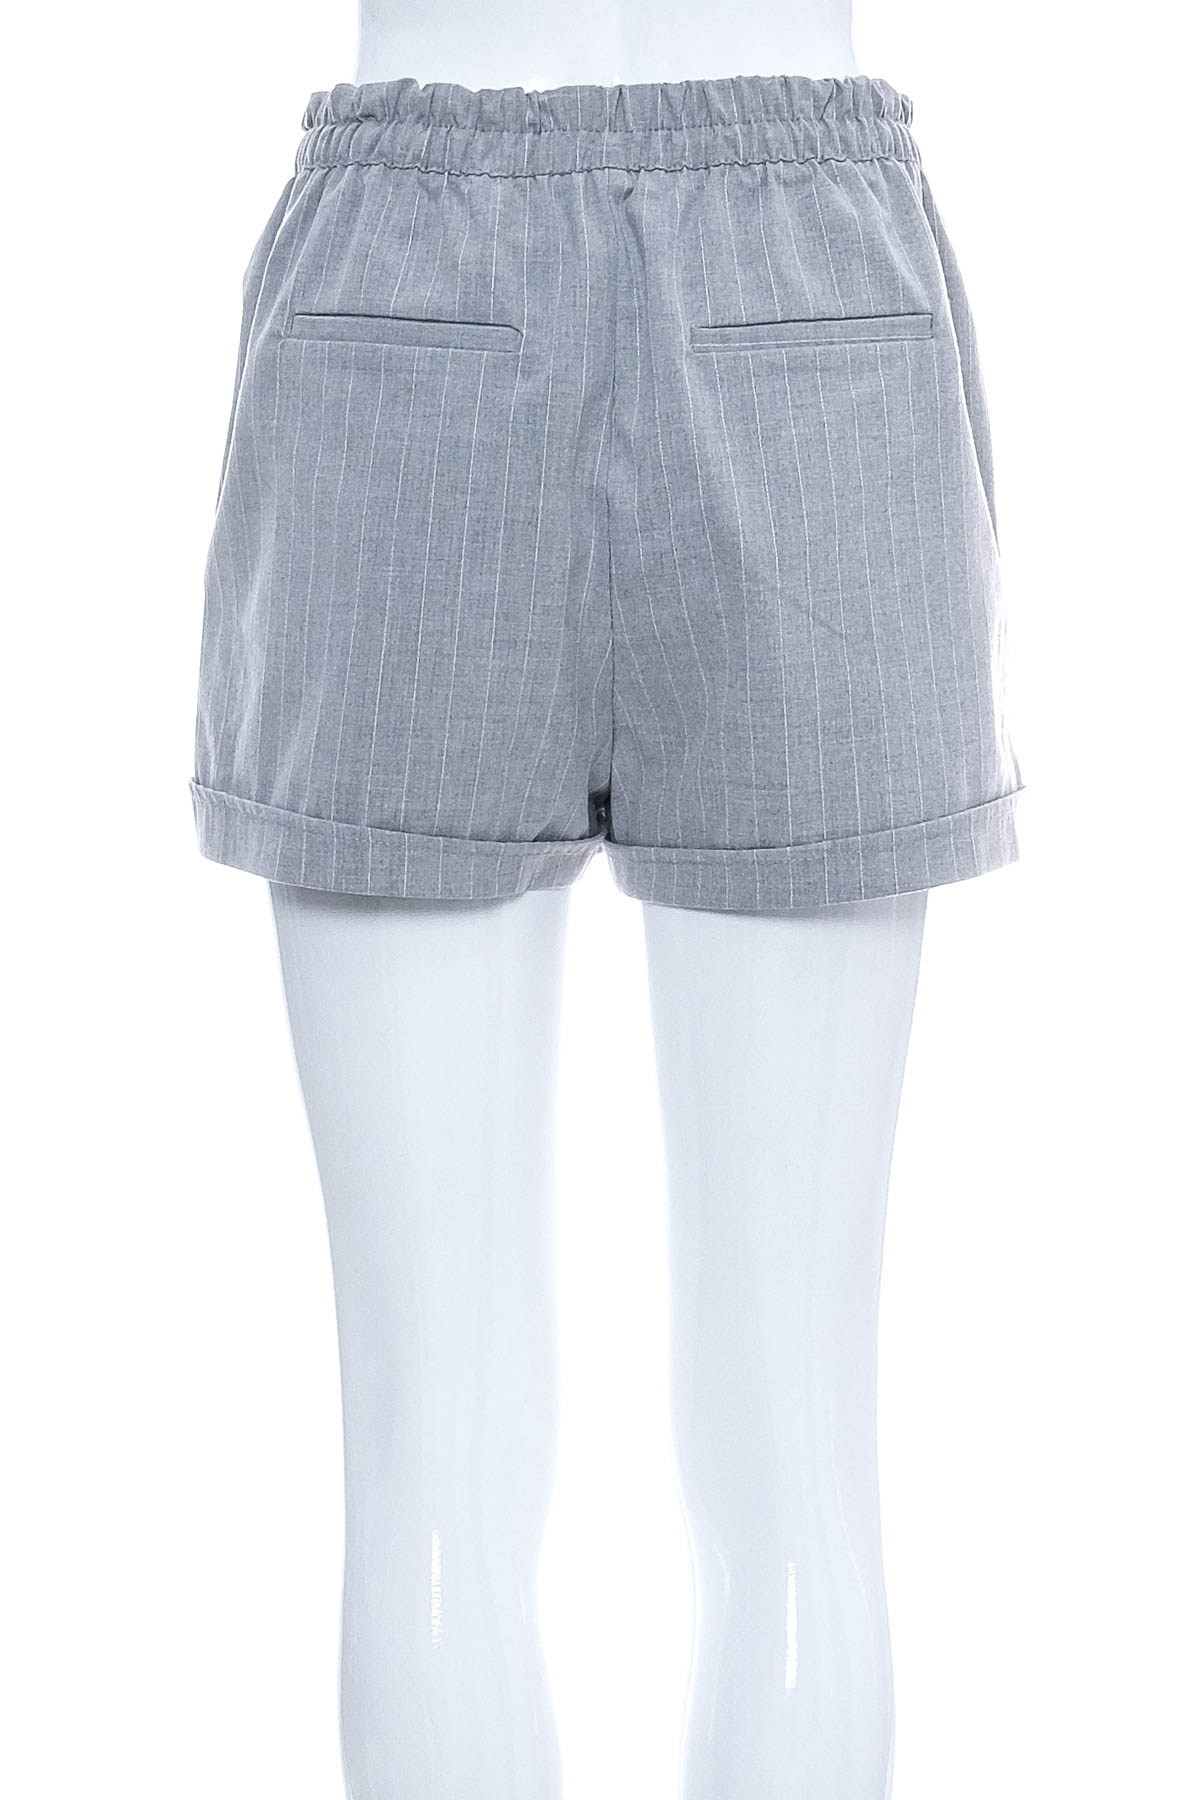 Female shorts - Bershka - 1